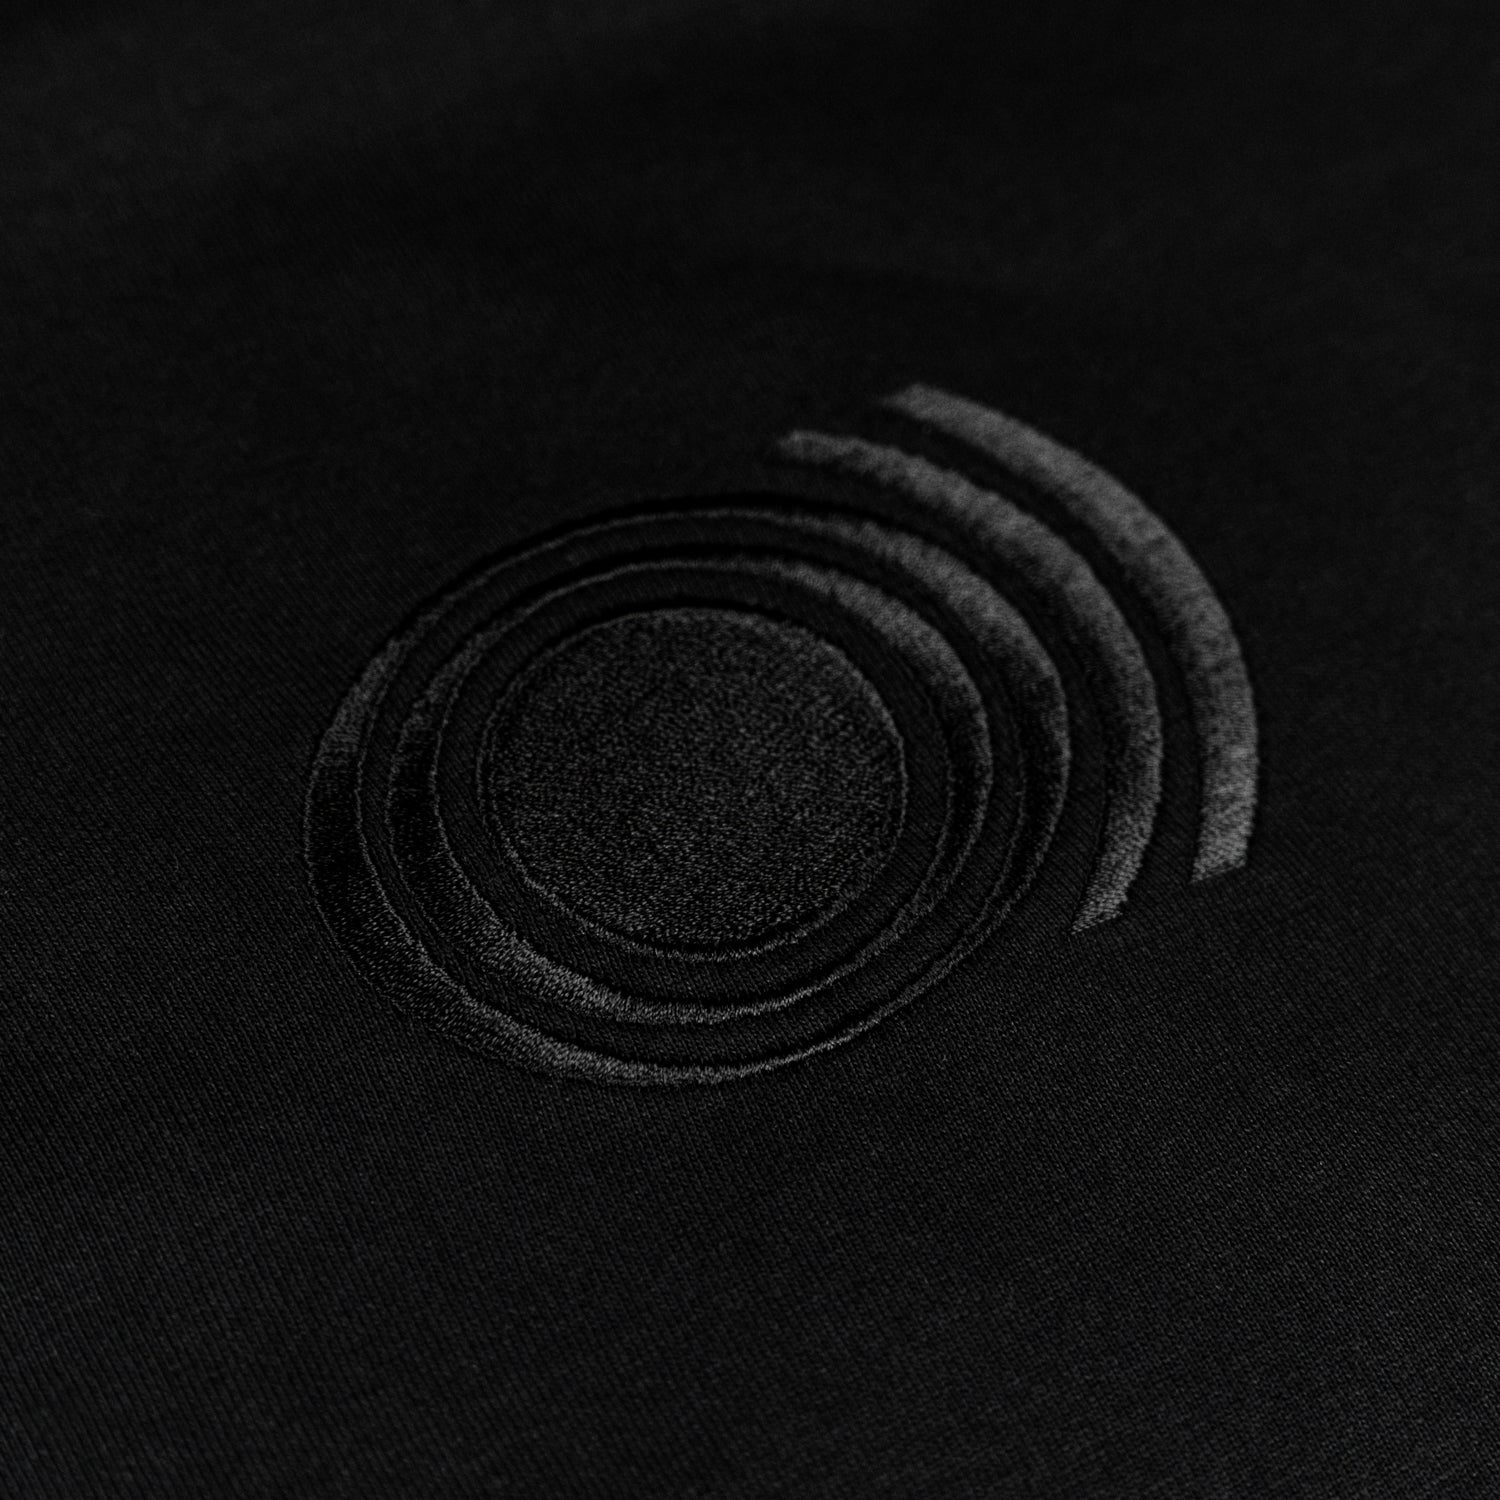 SUNN O))) "Embroidered Logo - Black On Black" Longsleeve